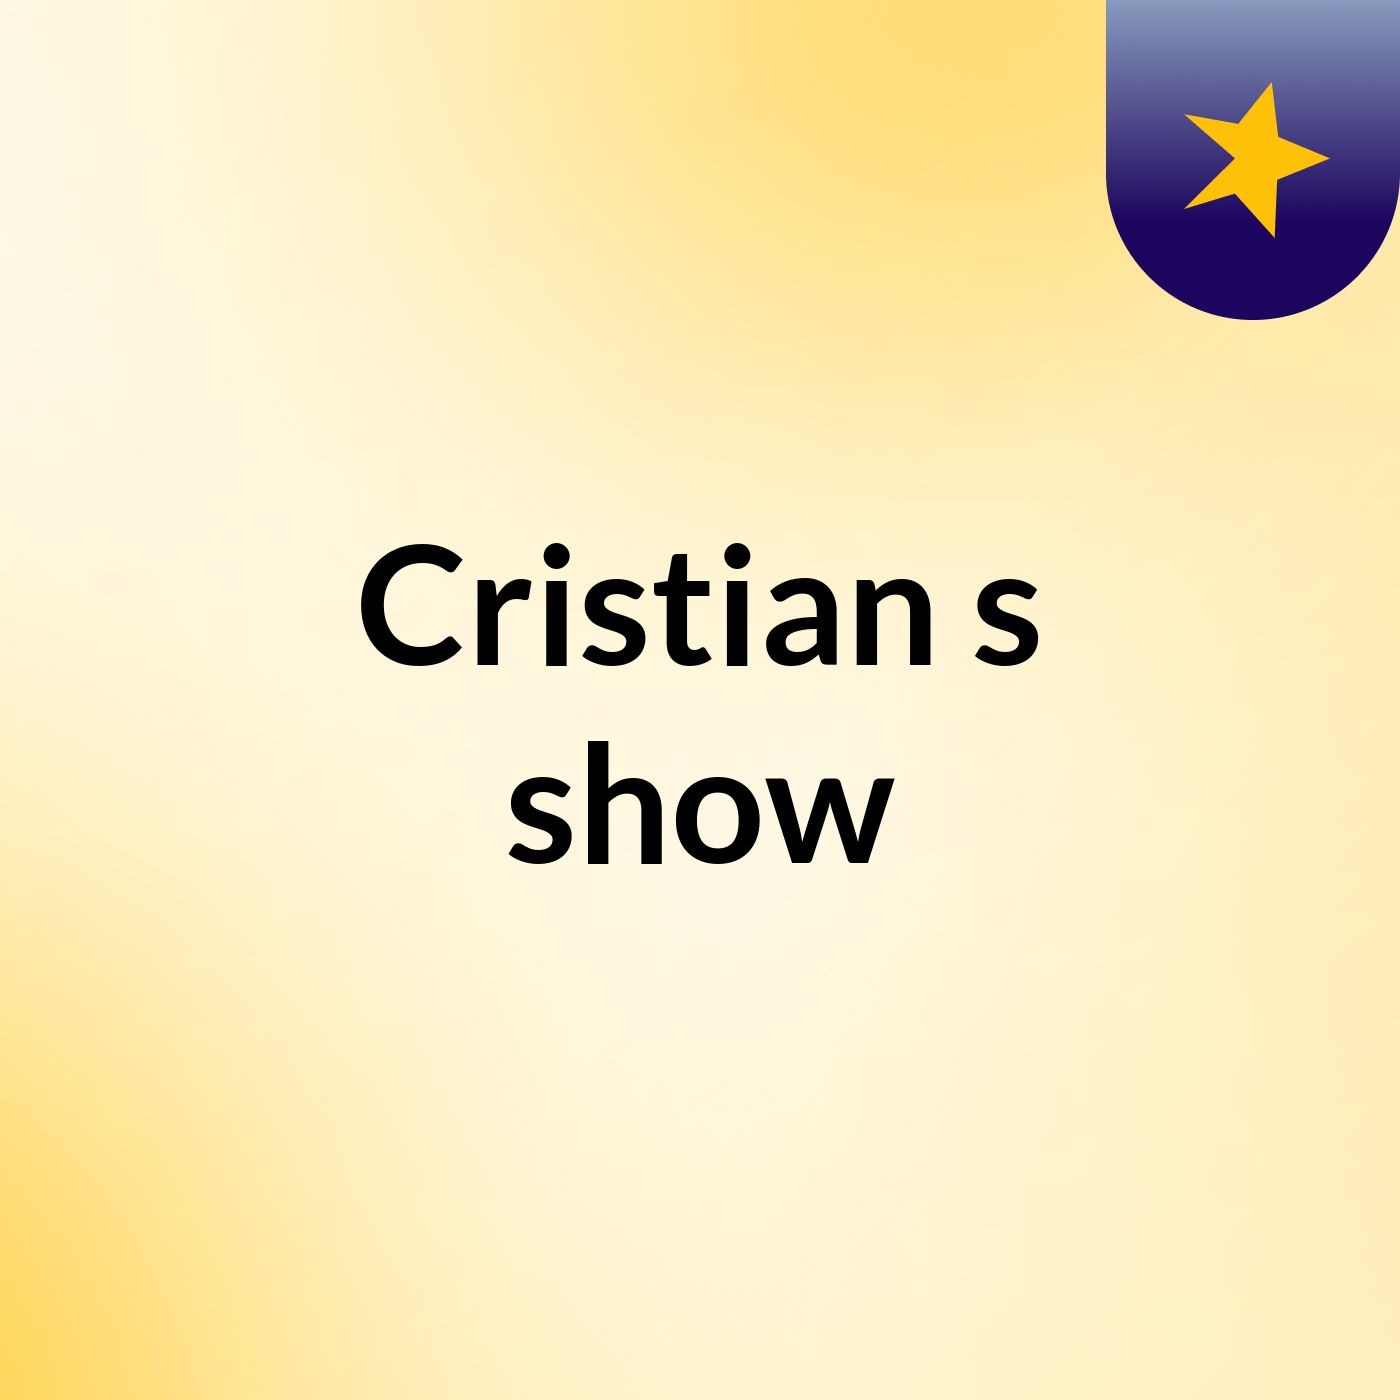 Cristian's show